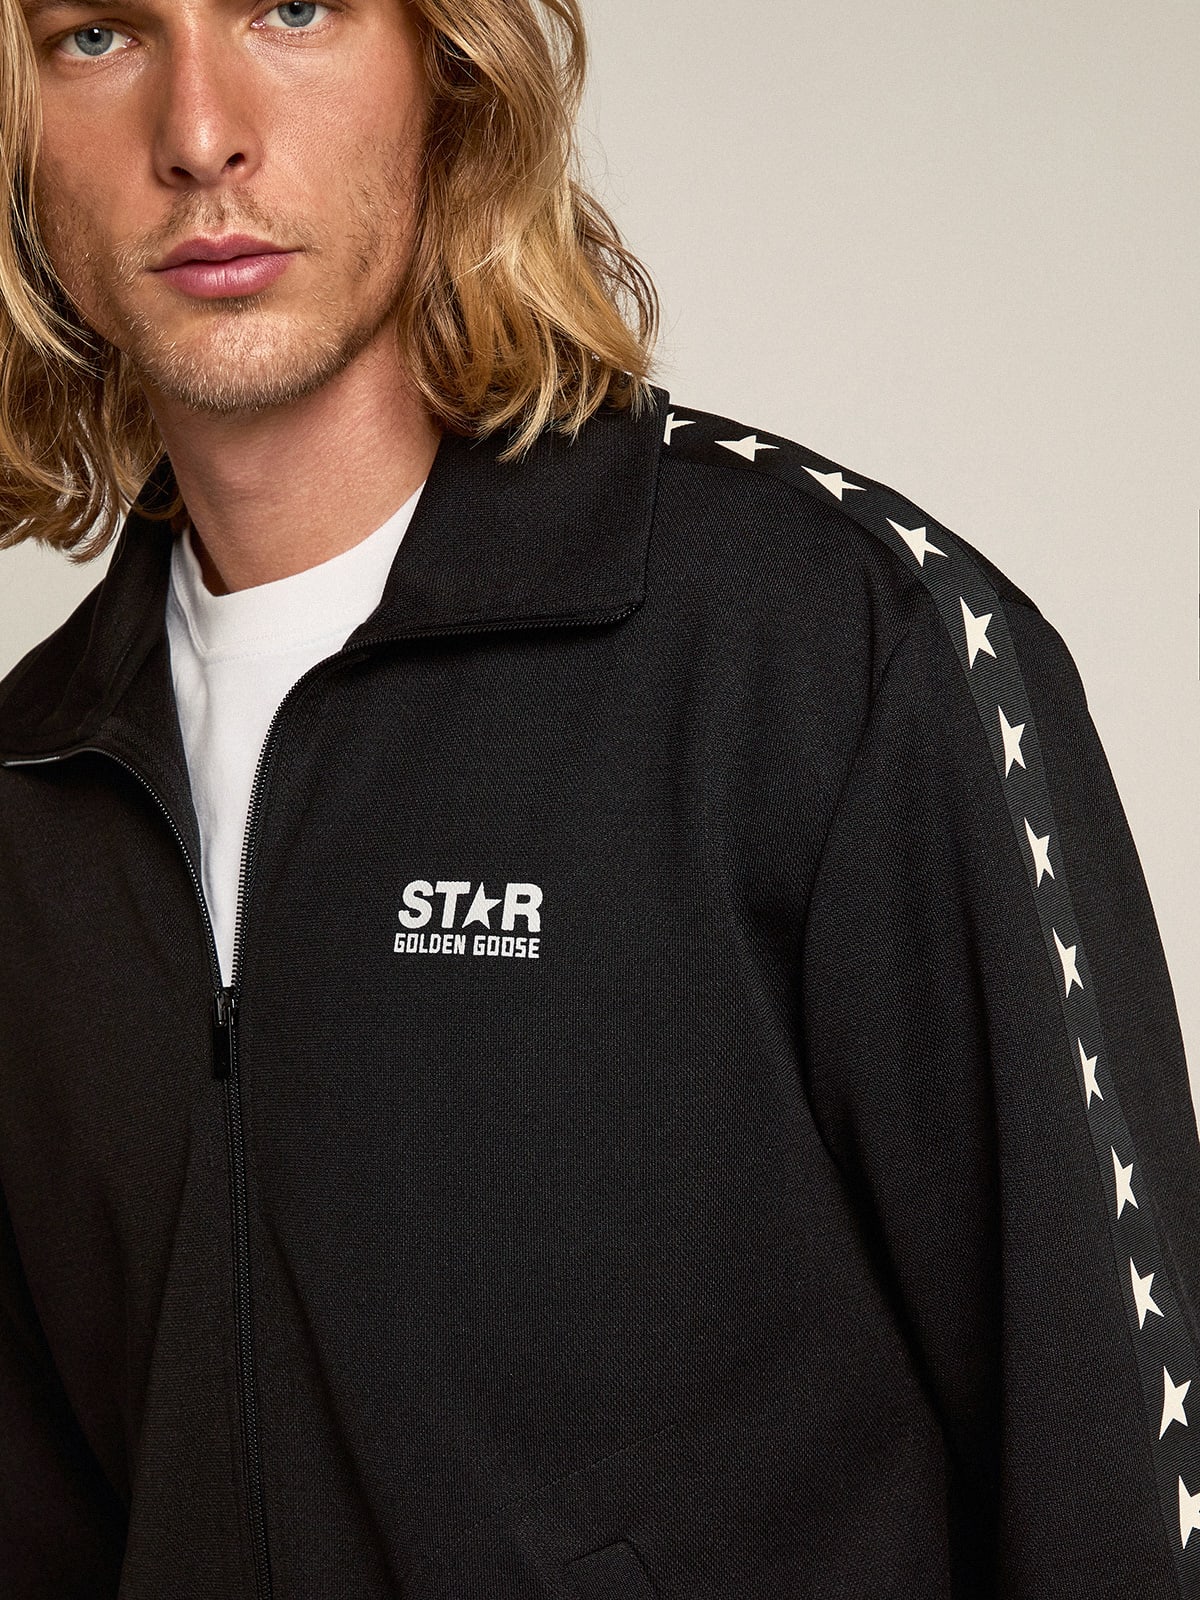 Golden Goose - Men’s black zipped sweatshirt with contrasting white stars in 